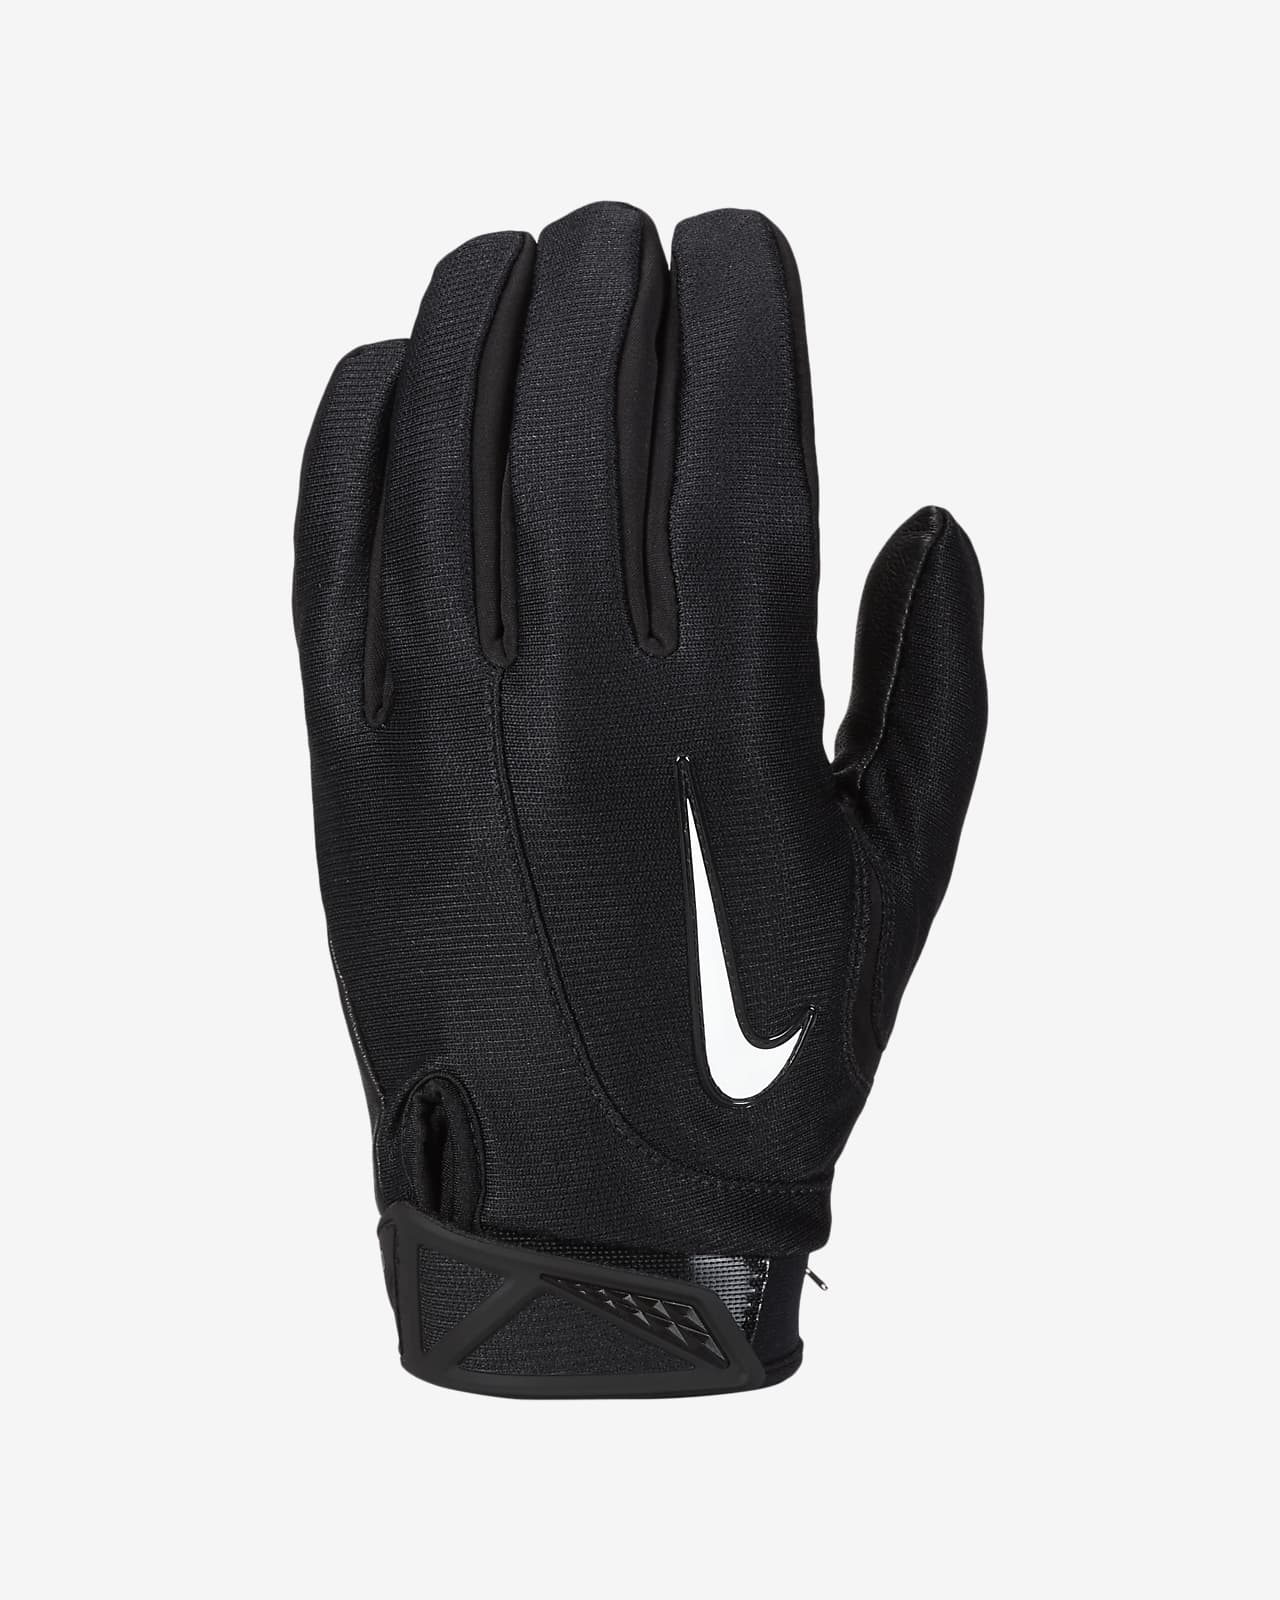 Nike Sideline Football Gloves Pair).